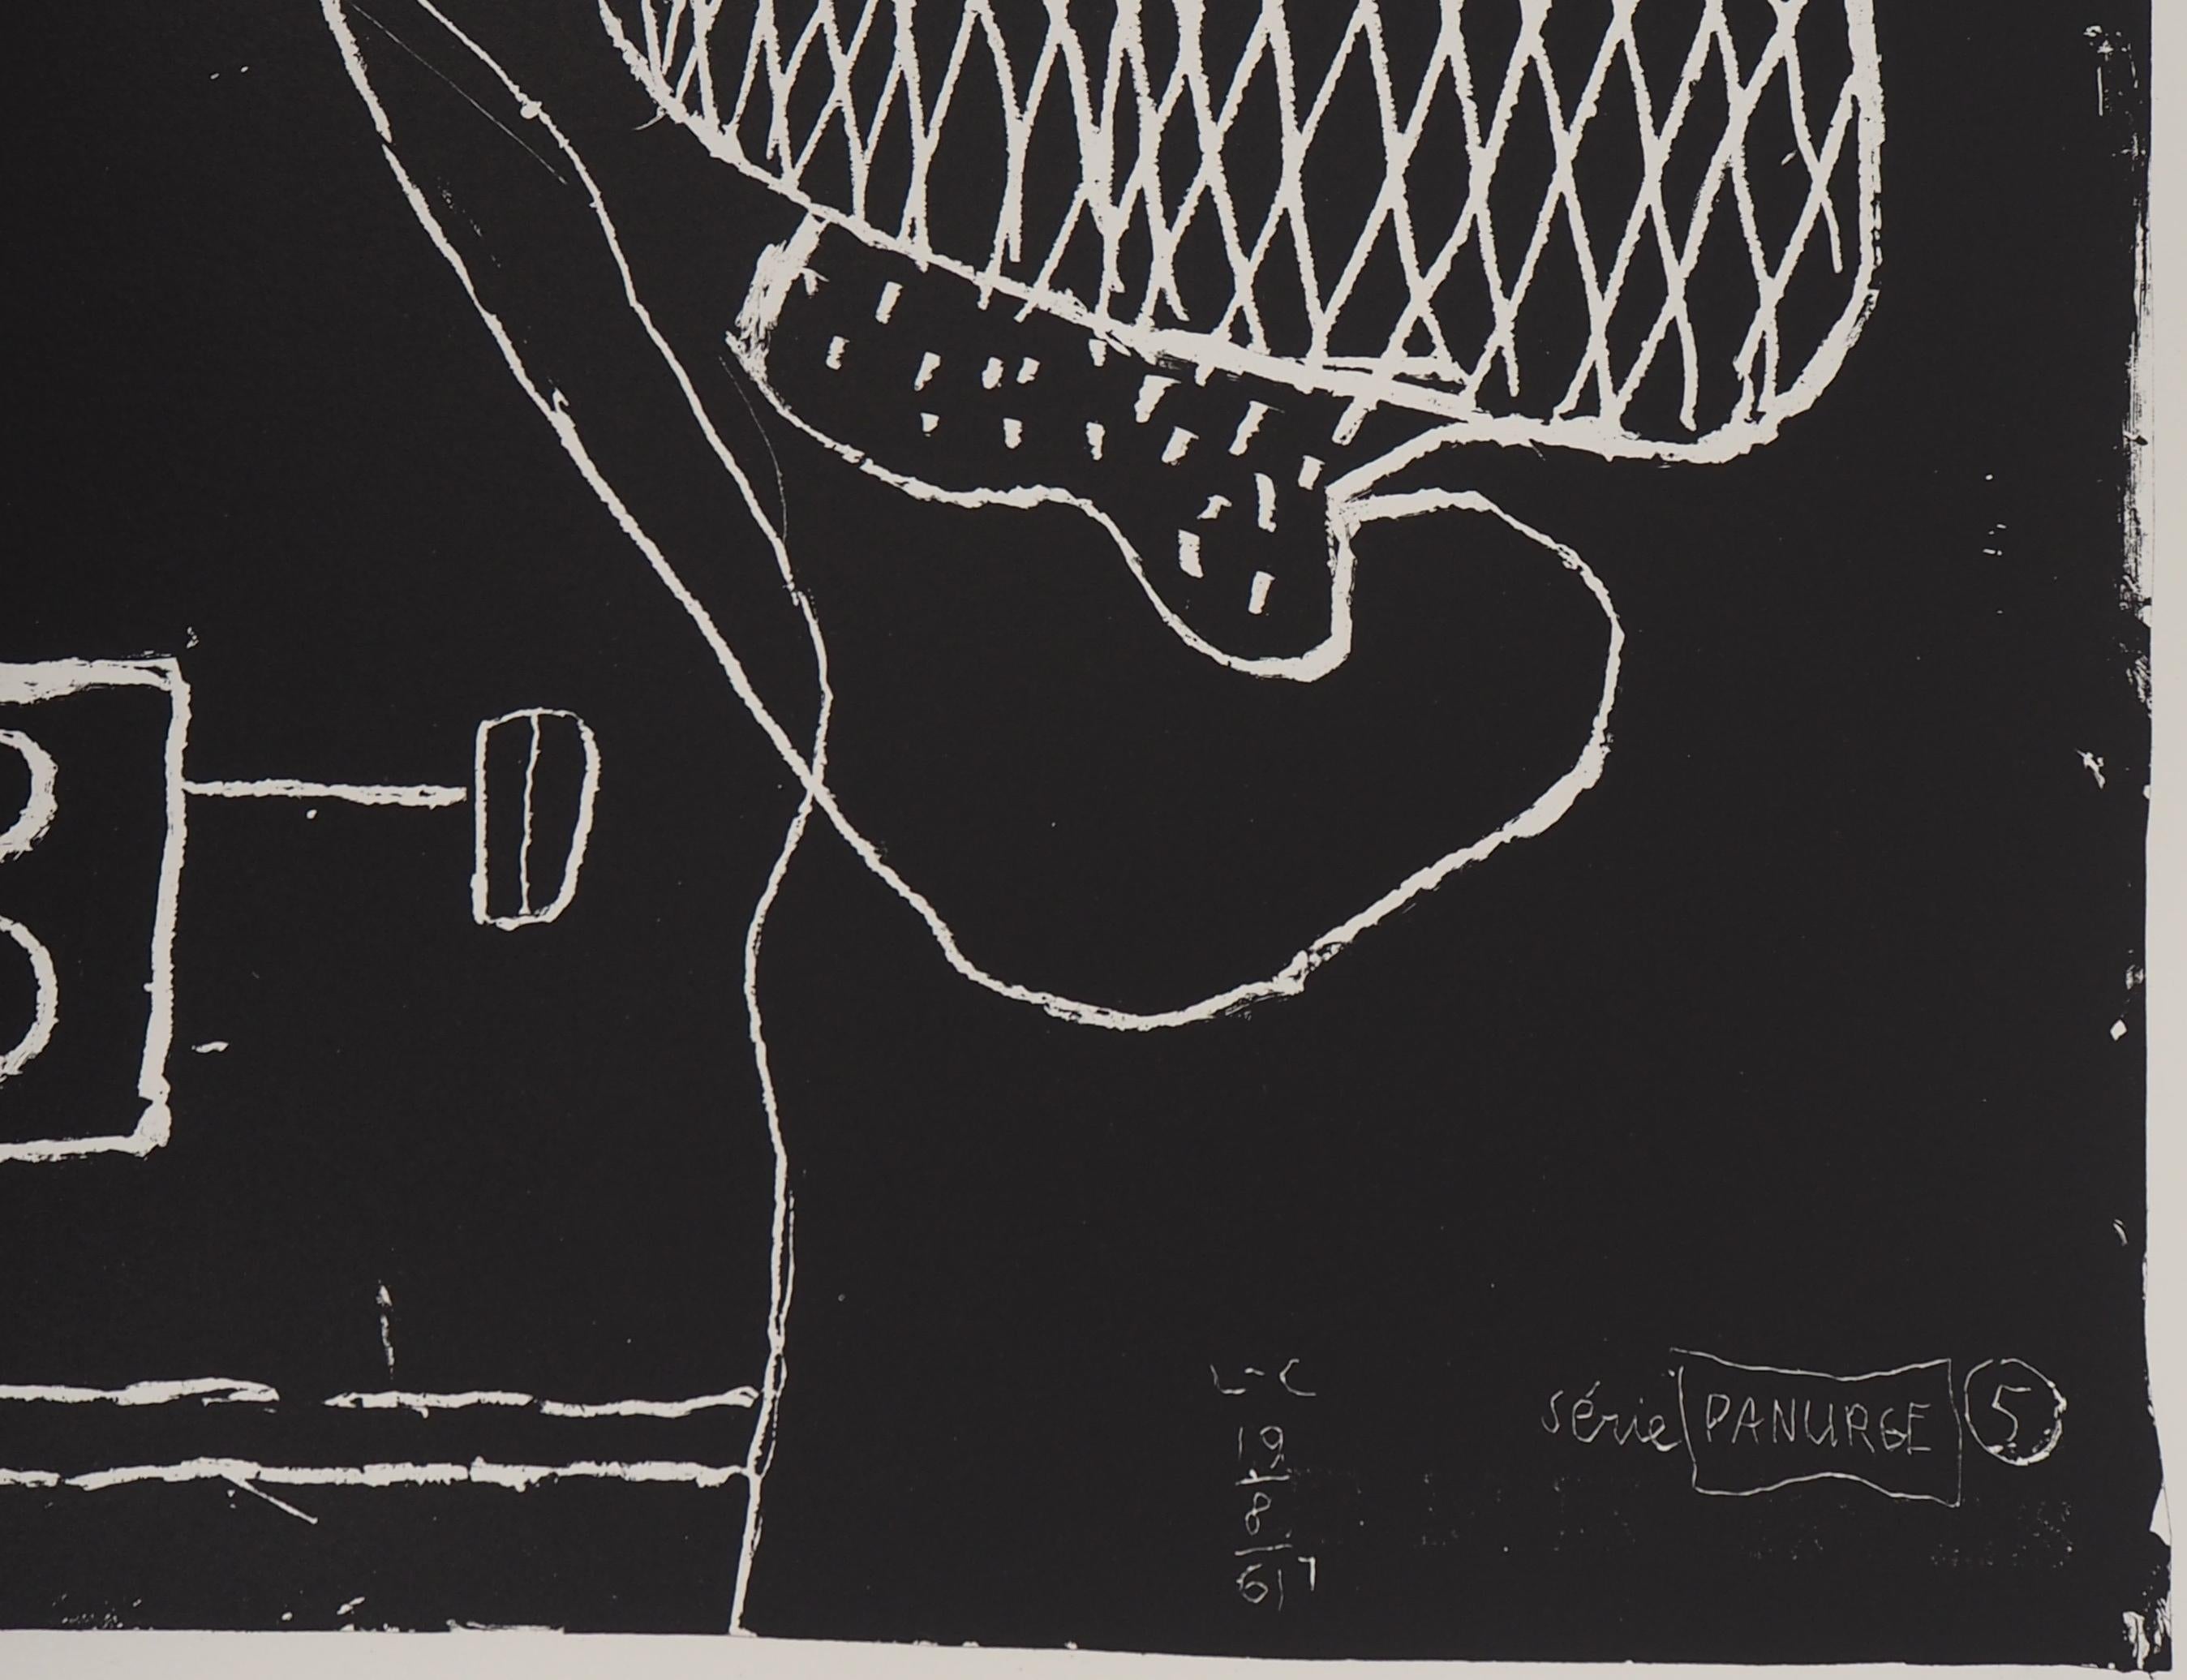 Hands and Sea Shell - Original Lithograph (Mourlot) - Black Figurative Print by Le Corbusier